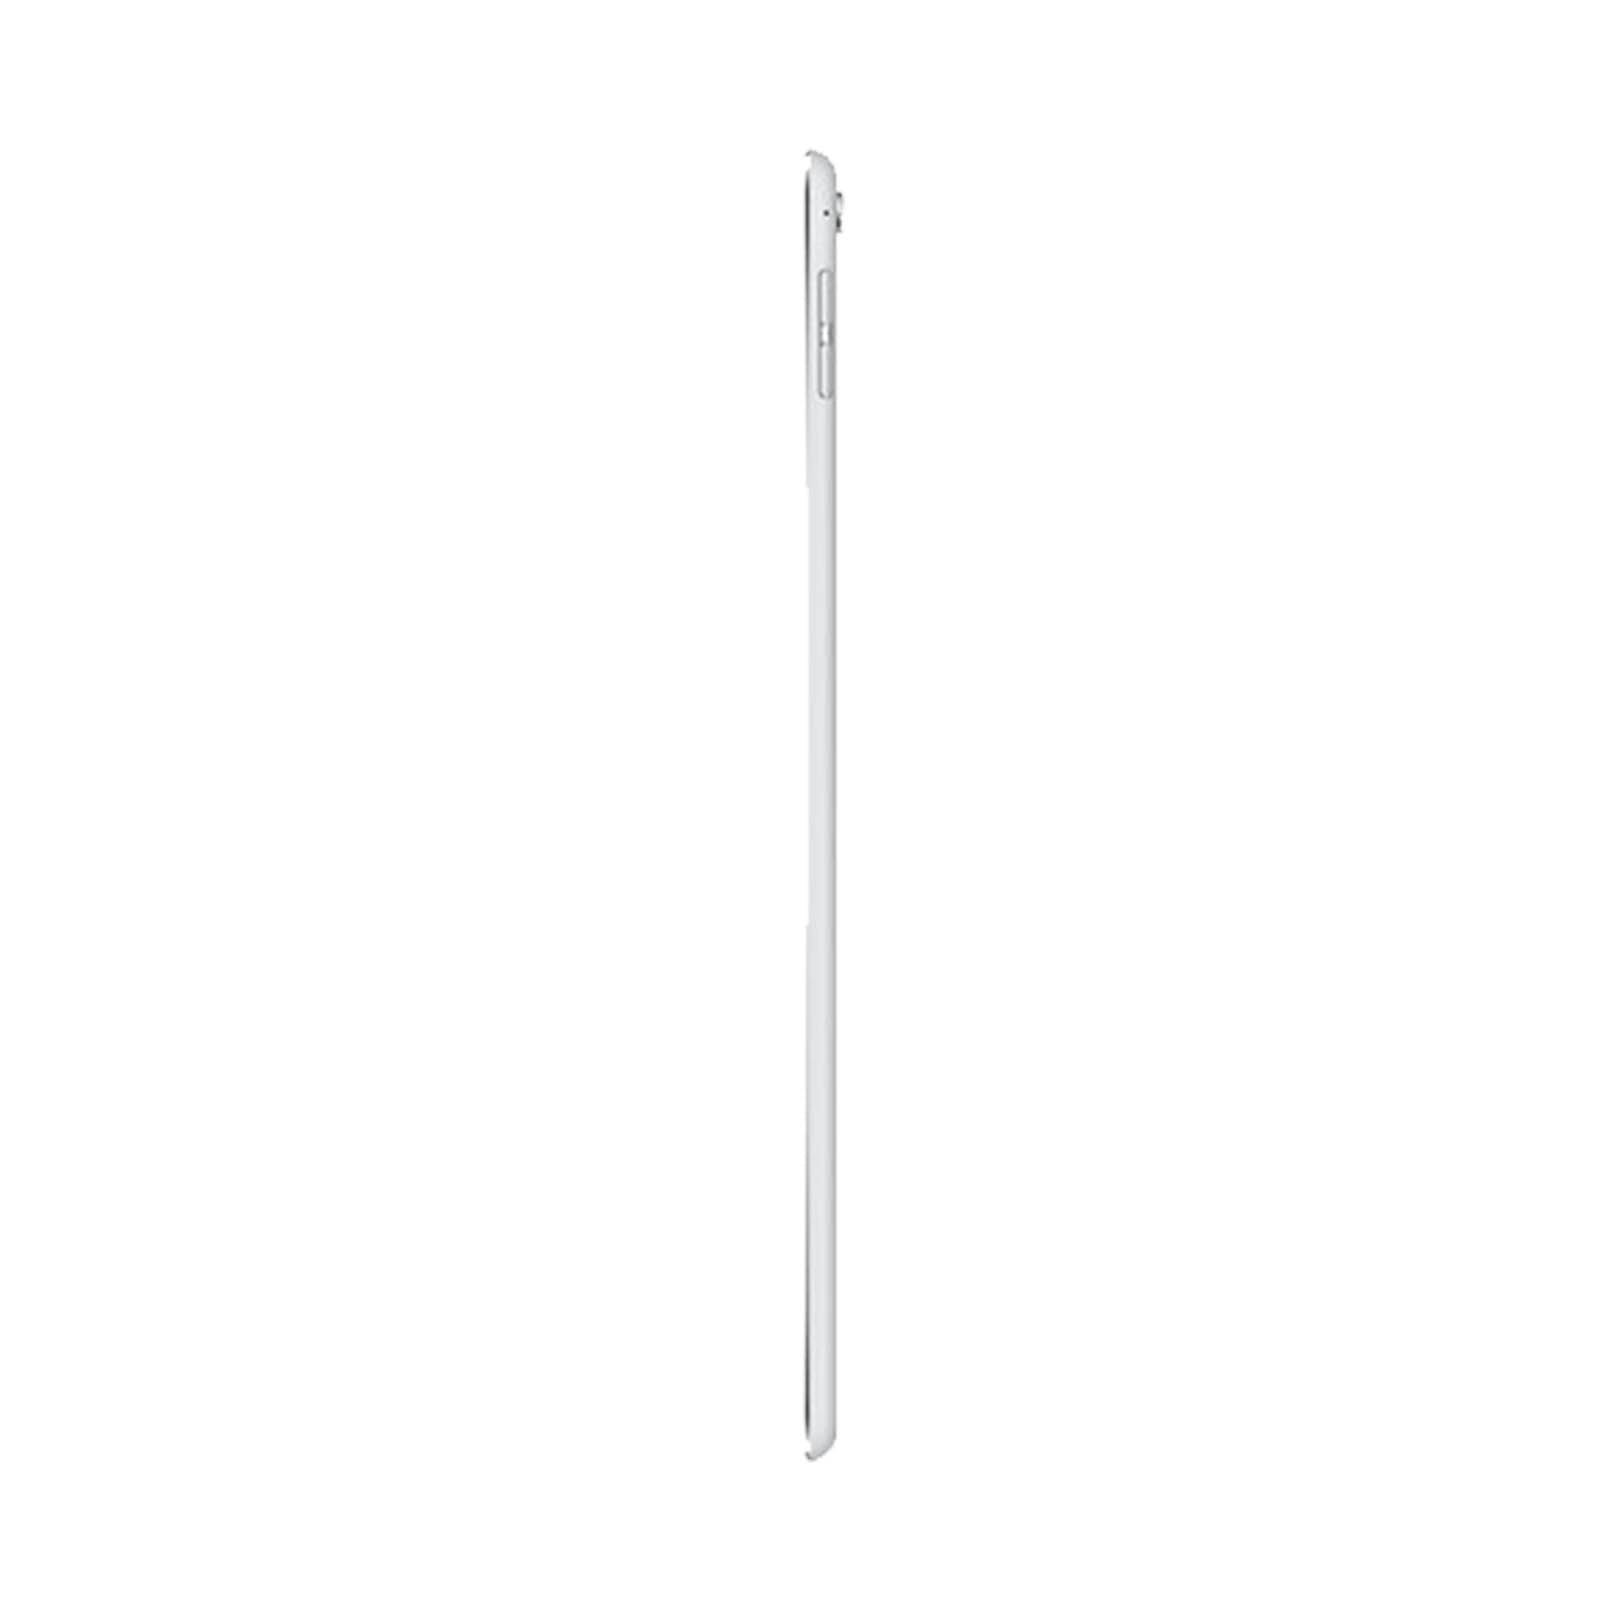 Apple iPad Pro 9.7" 256GB Silver Pristine - WiFi